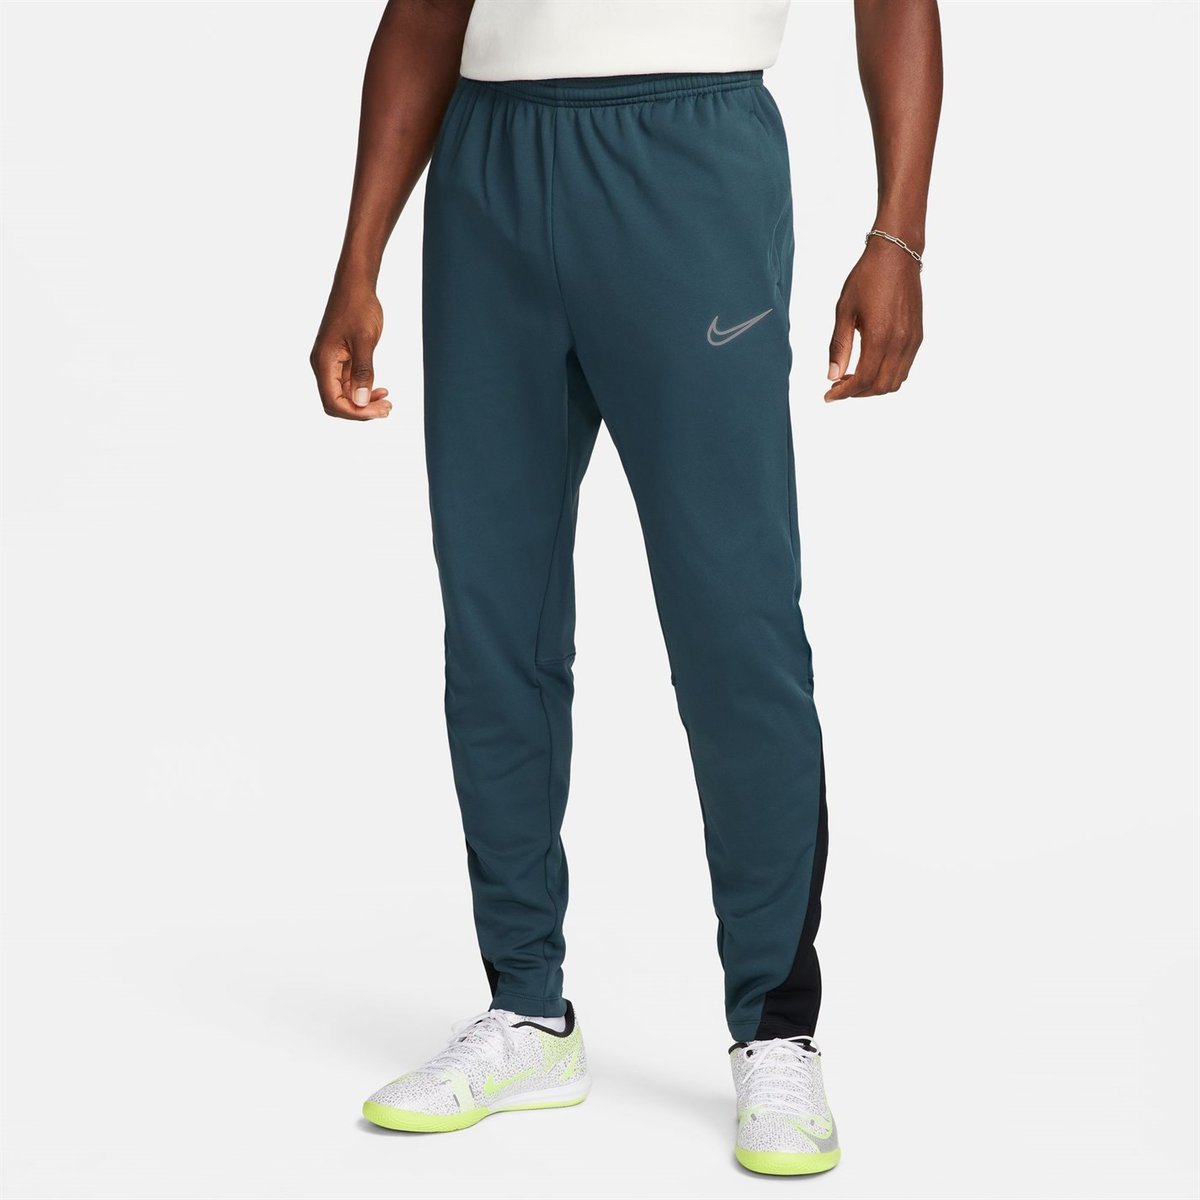 Nike Track Pant Inf00